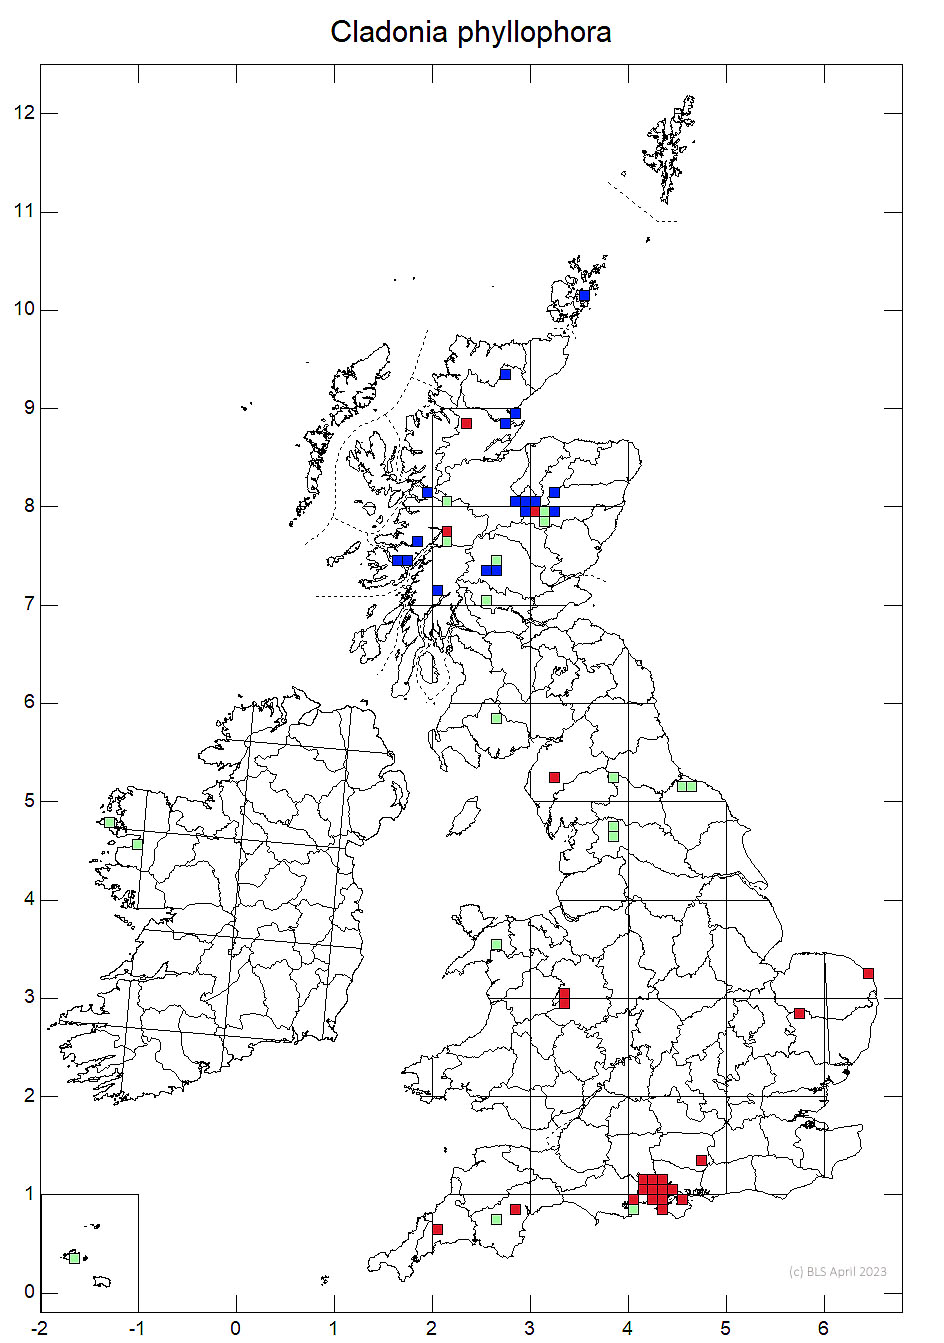 Cladonia phyllophora 10km sq distribution map